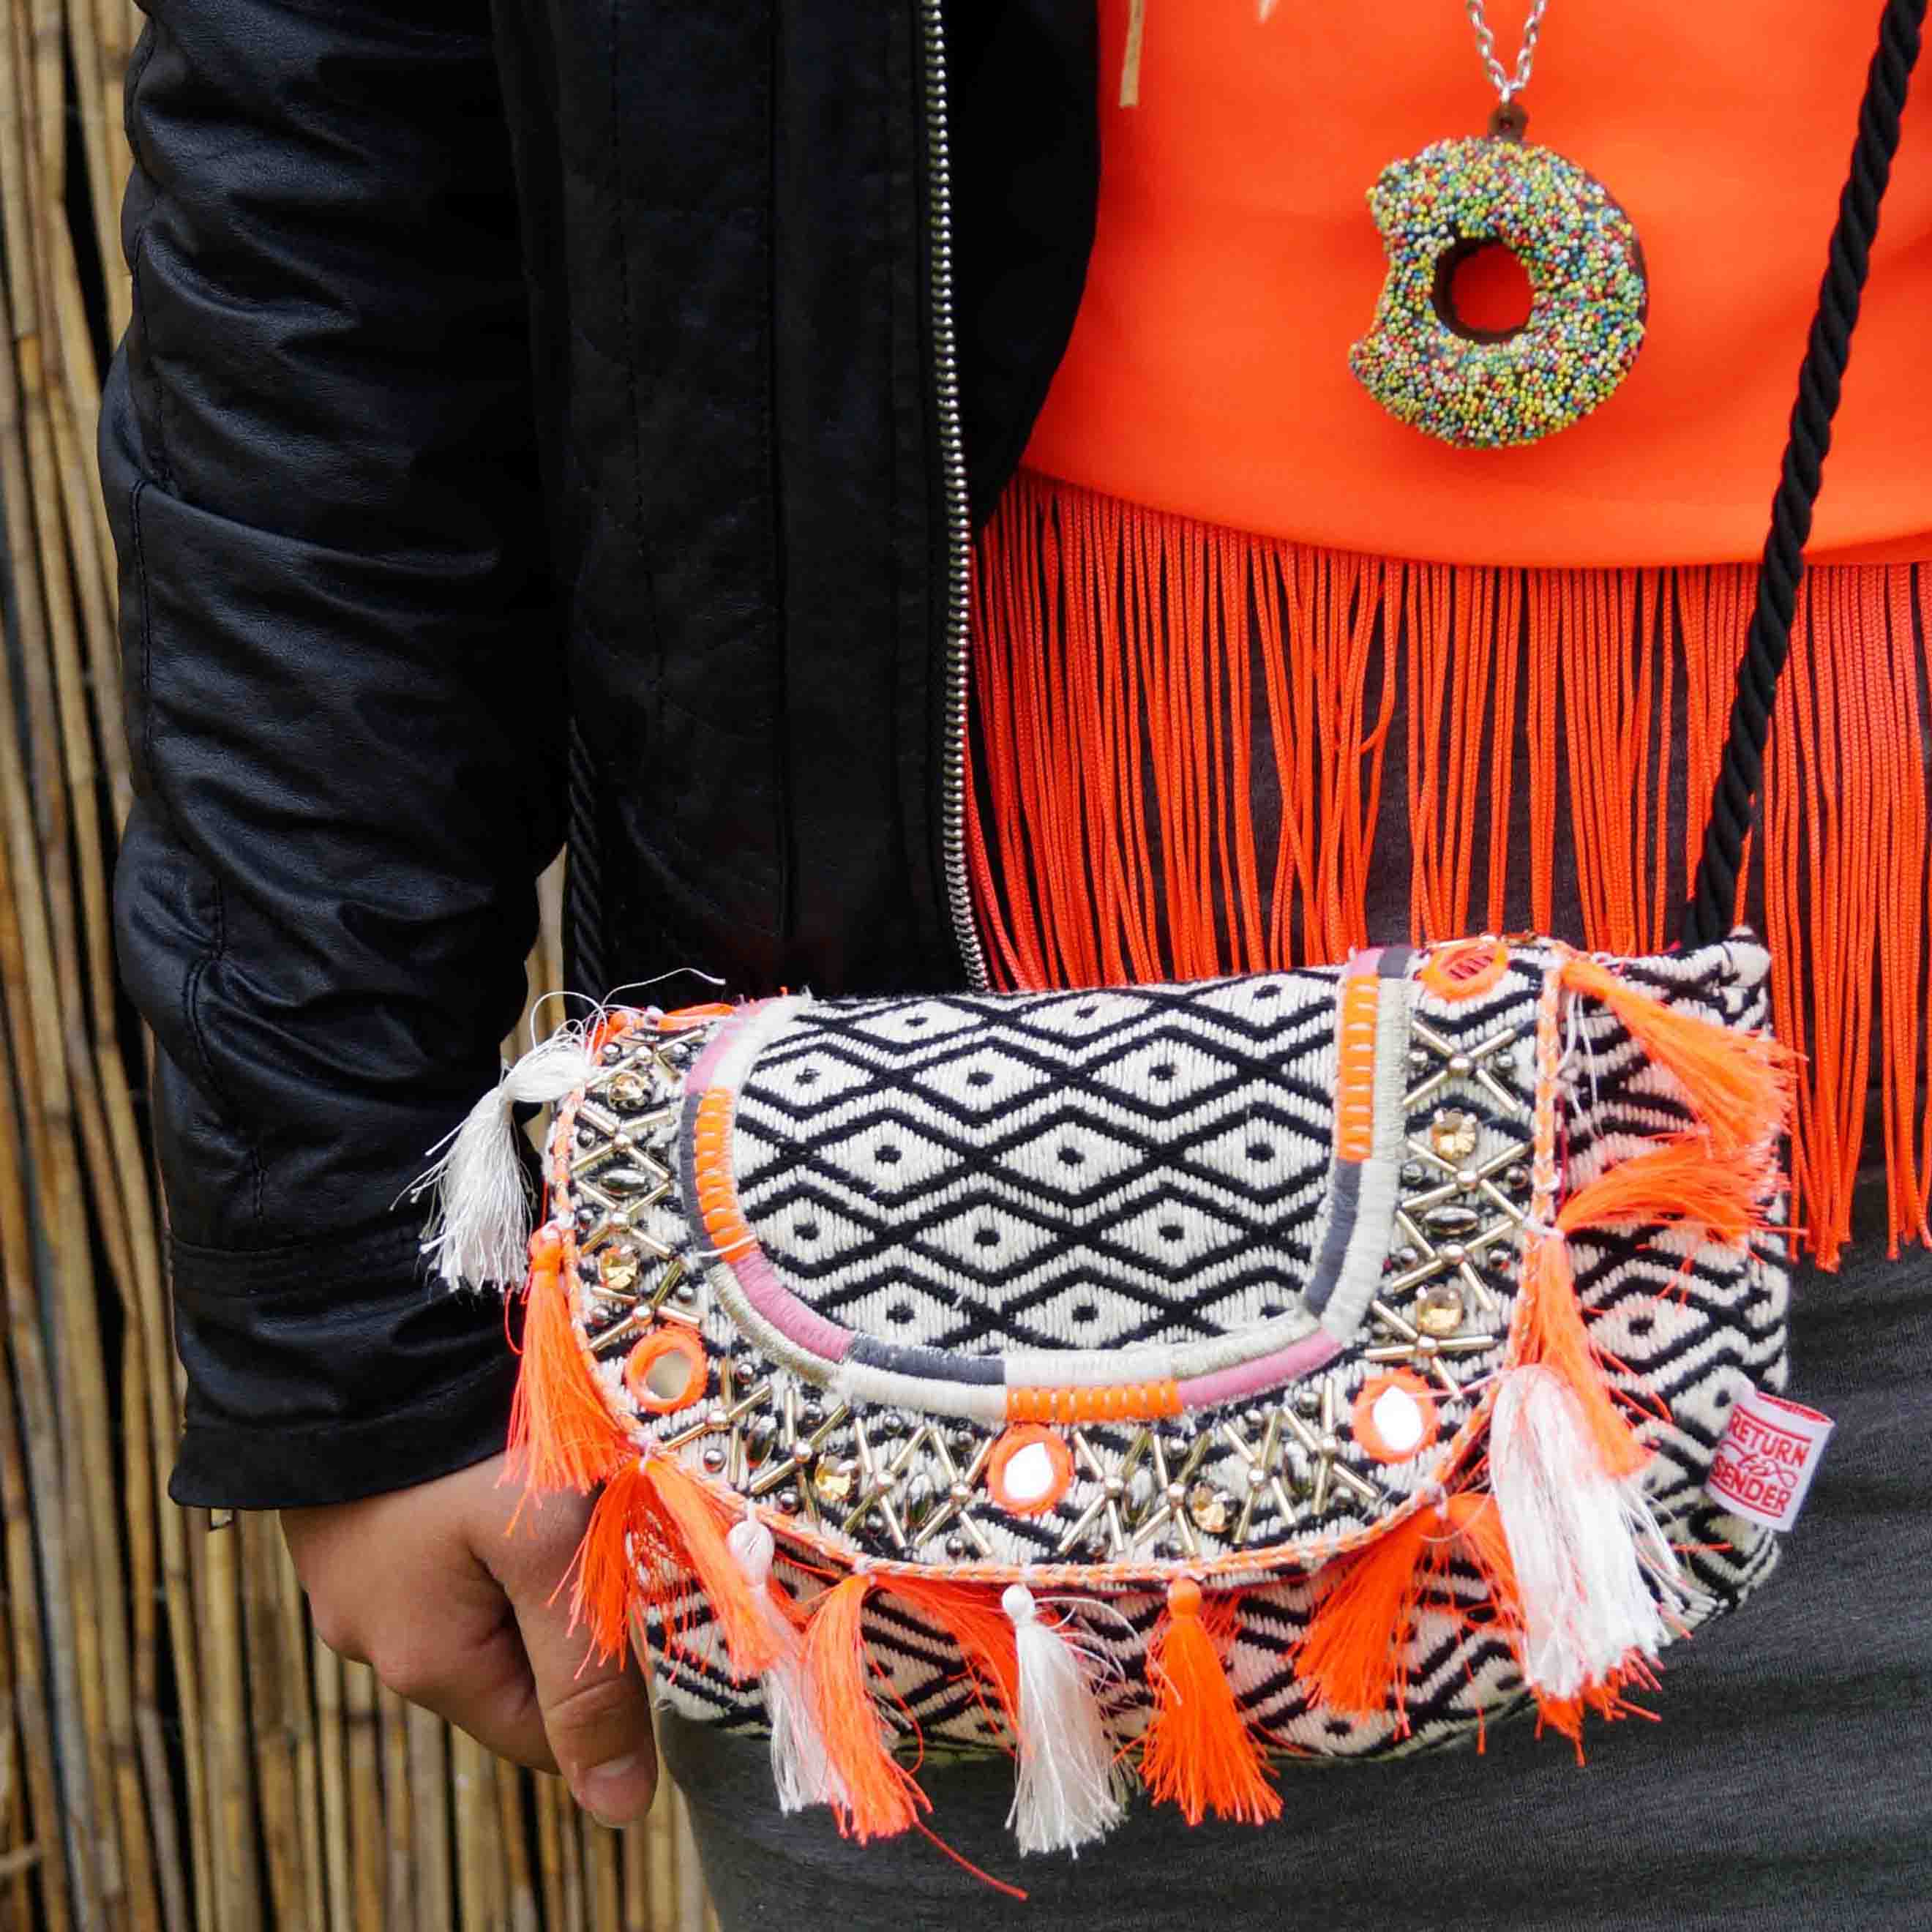 Bag at You - Fashion Blog - Fierce Fashion Festival - Colorful shoulderbag